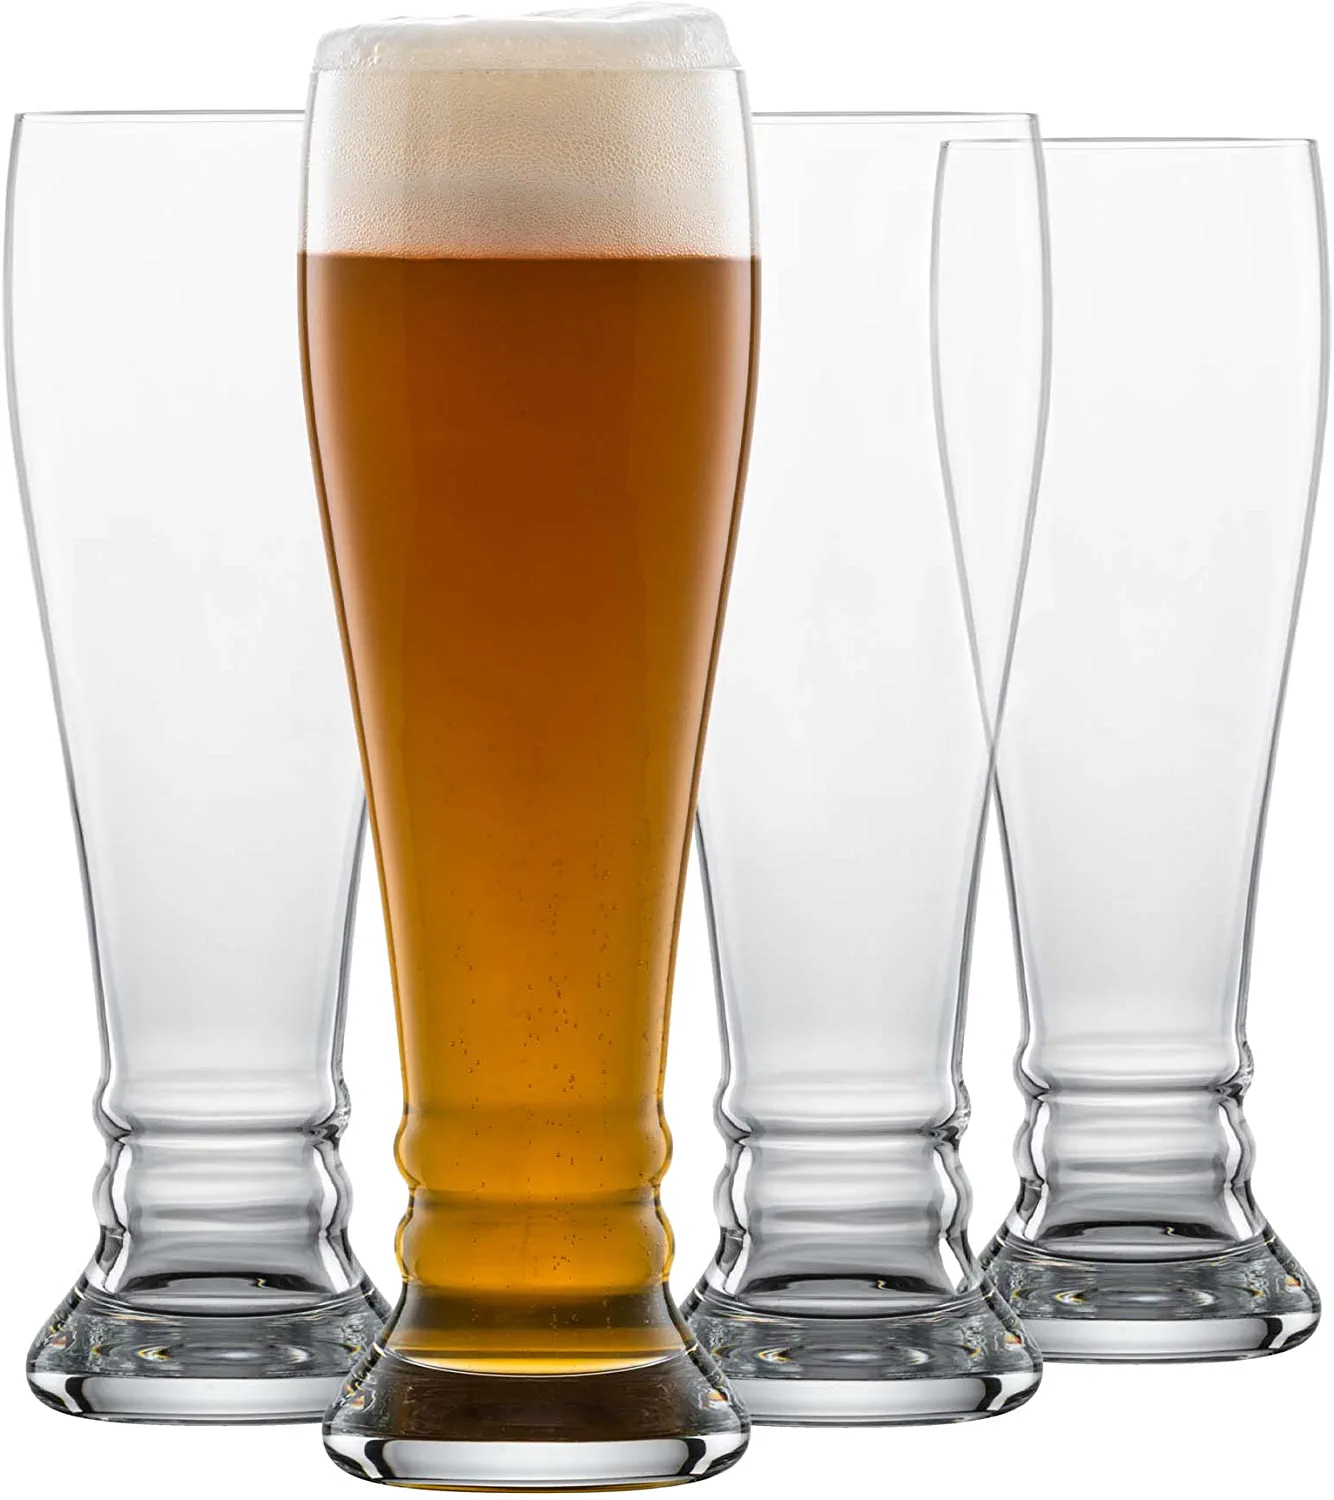 Schott Zwiesel Bavaria Beer Basic 130004 Wheat Beer Glasses Set of 4 Glass in Crystal 0.5 L Dimensions: 8.4 cm x 8.4 cm x 25.2 cm